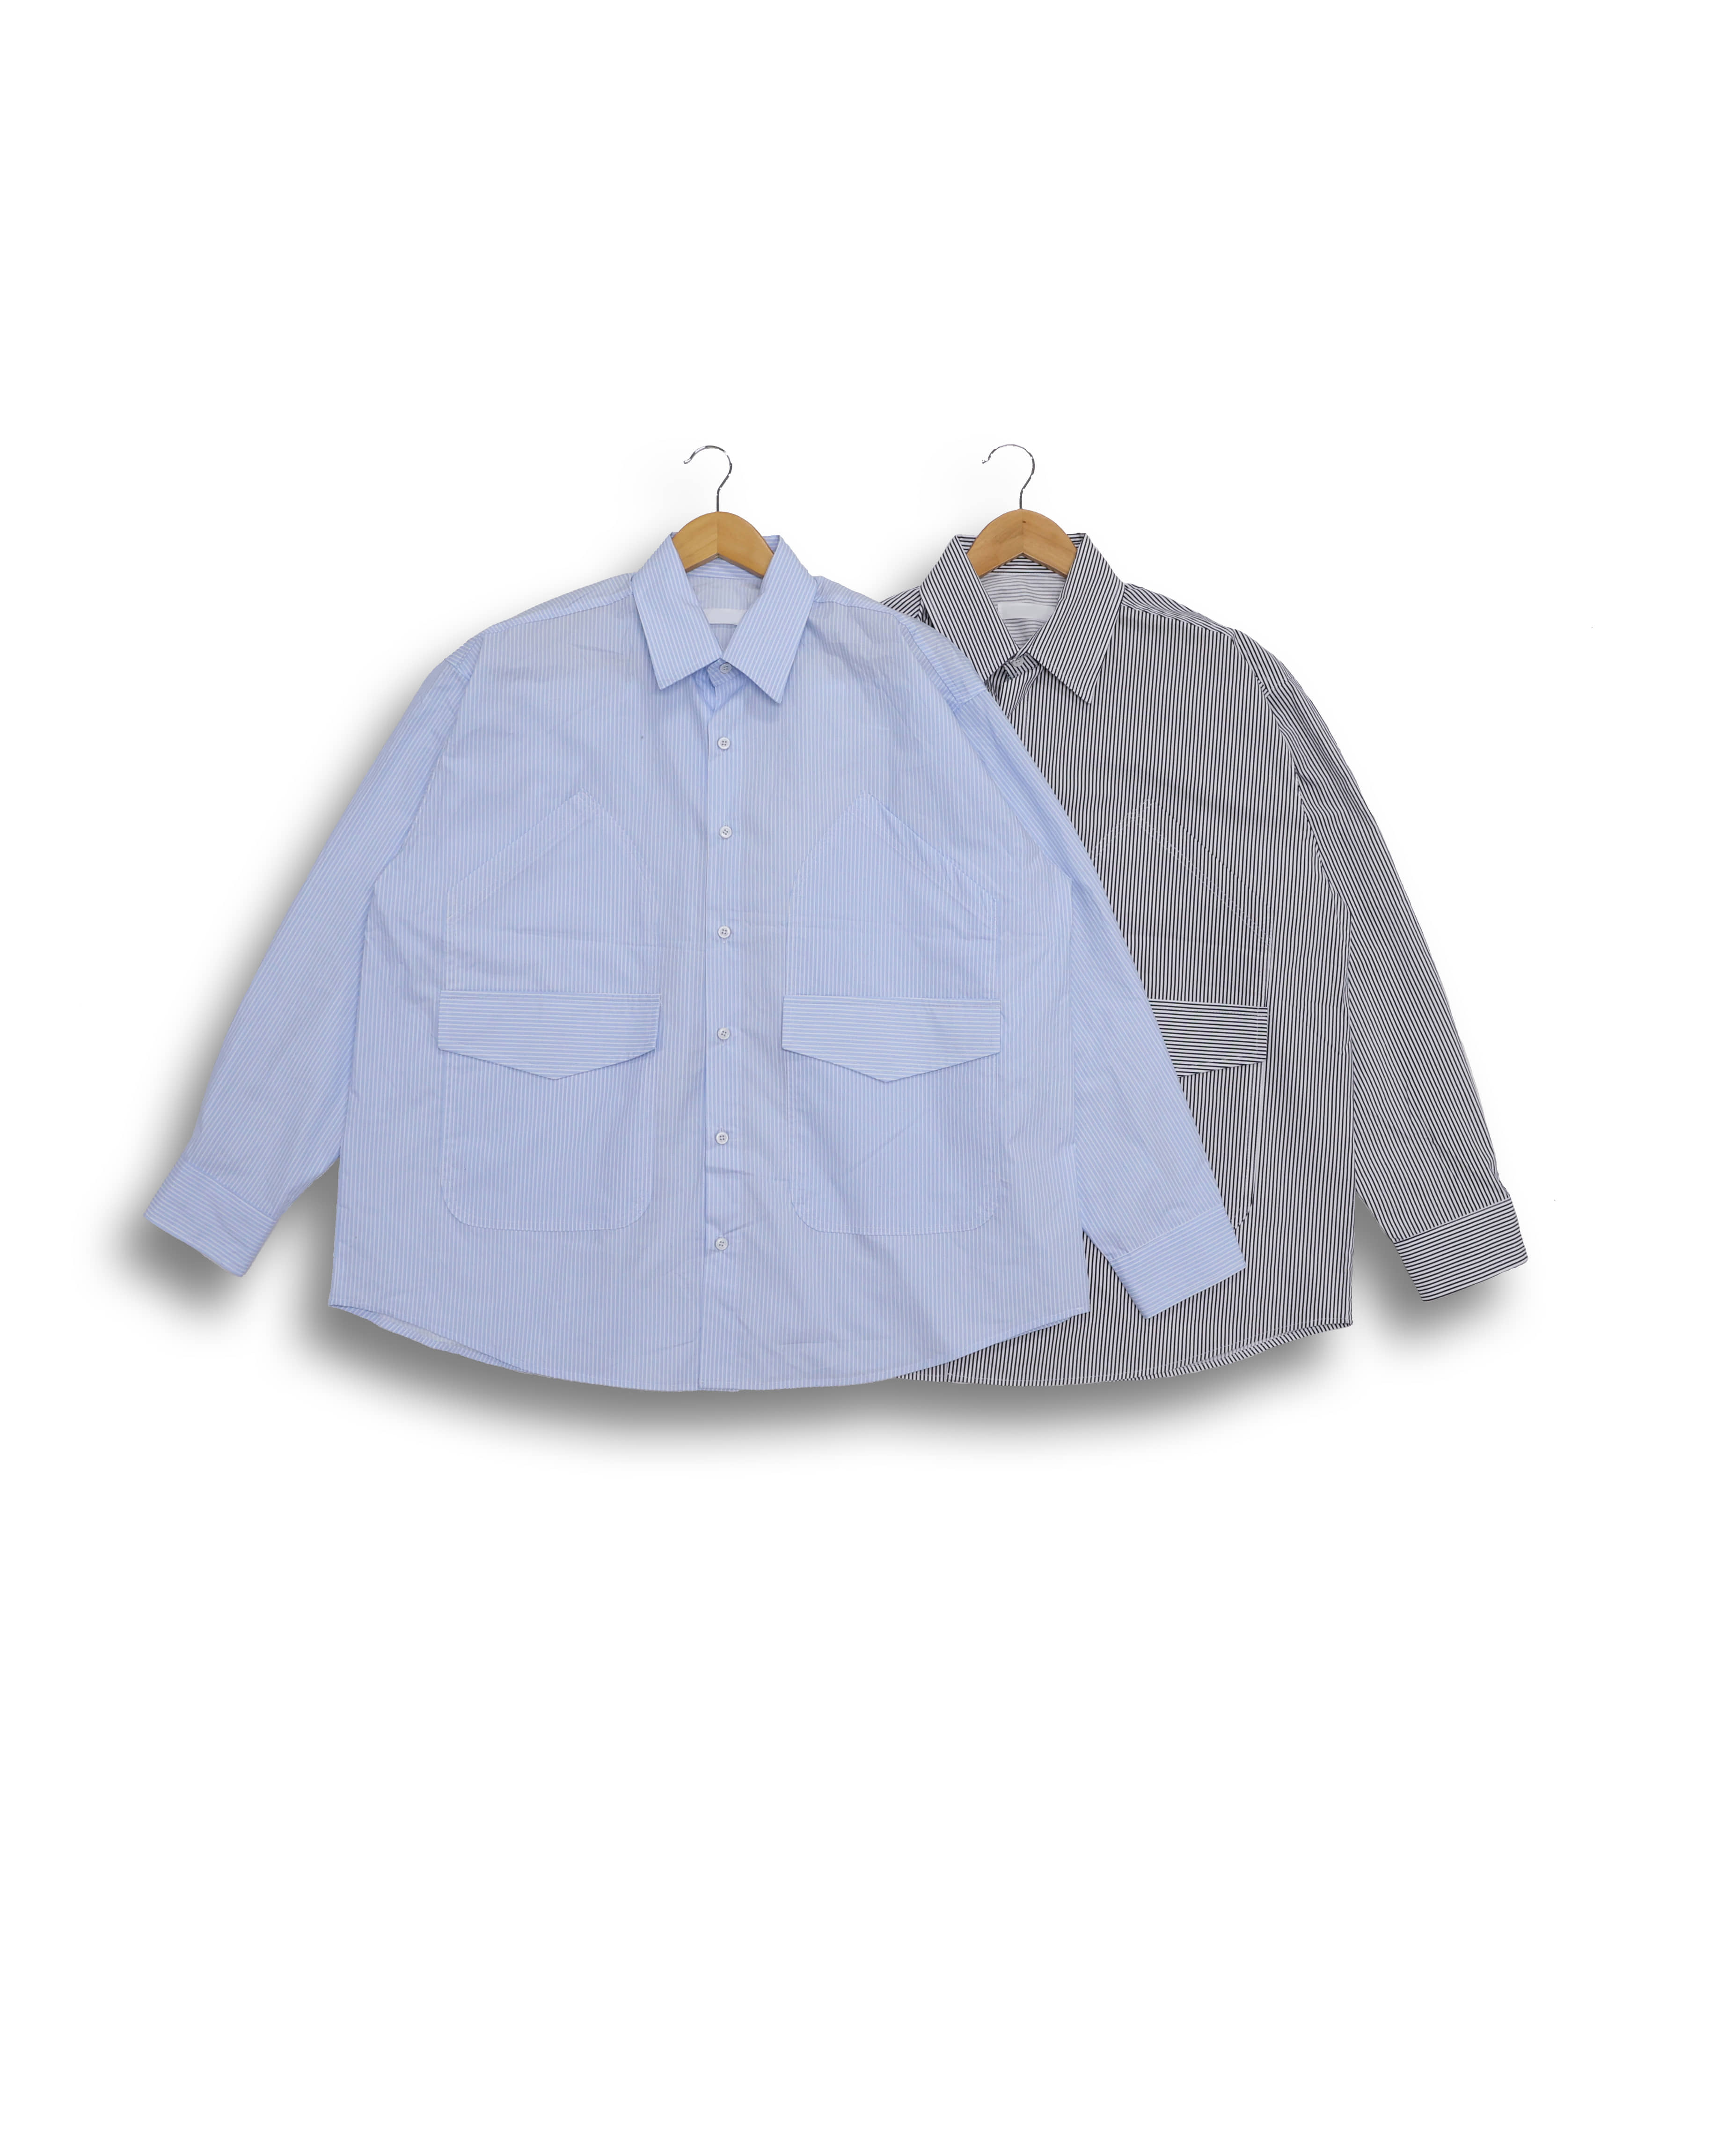 SOME Stripe Work Pocket Shirts (Navy/Blue)